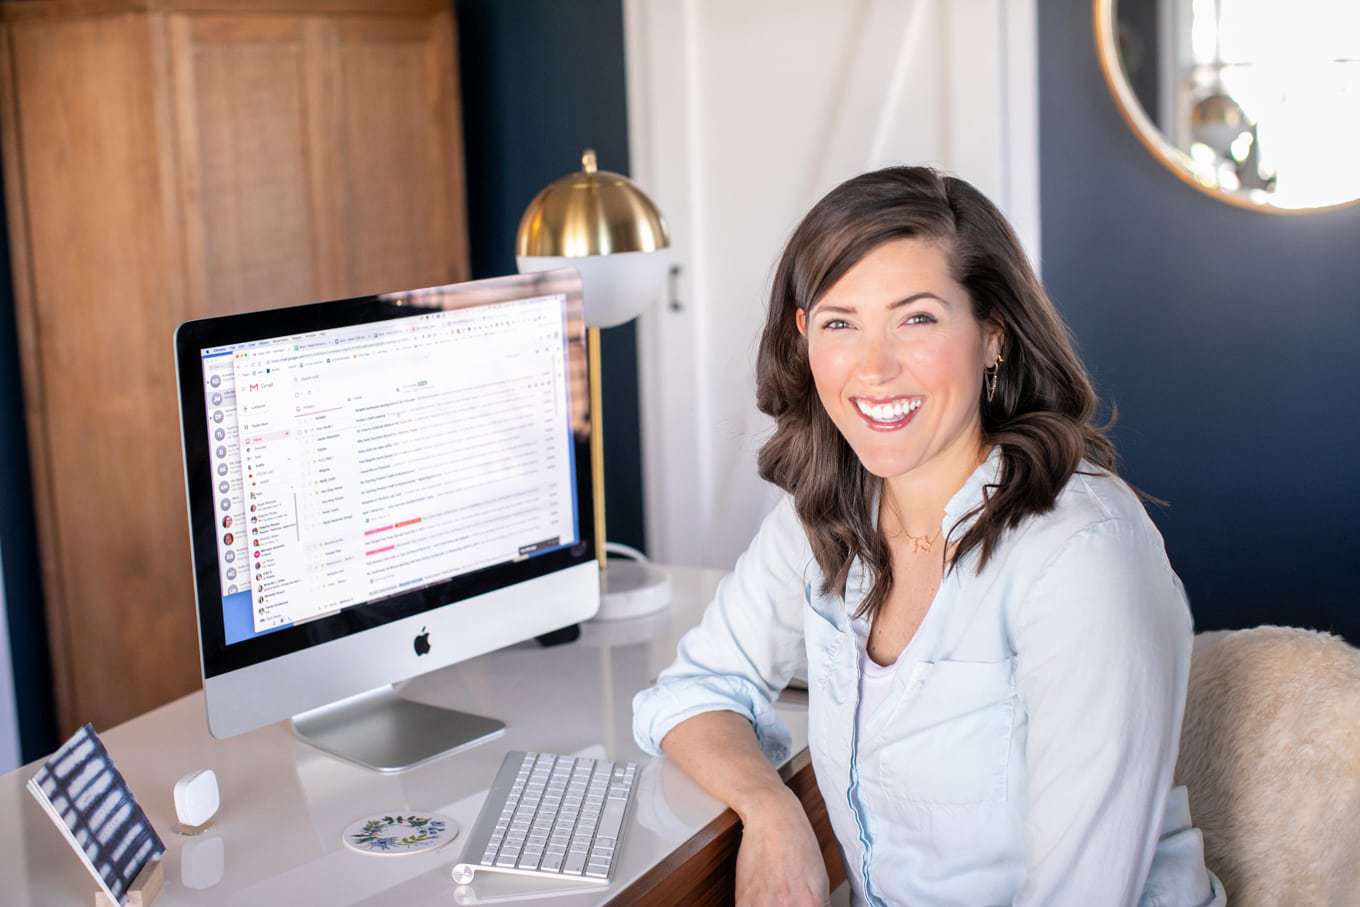 Kate Kordsmeier, sitting at her desk in front of a computer.